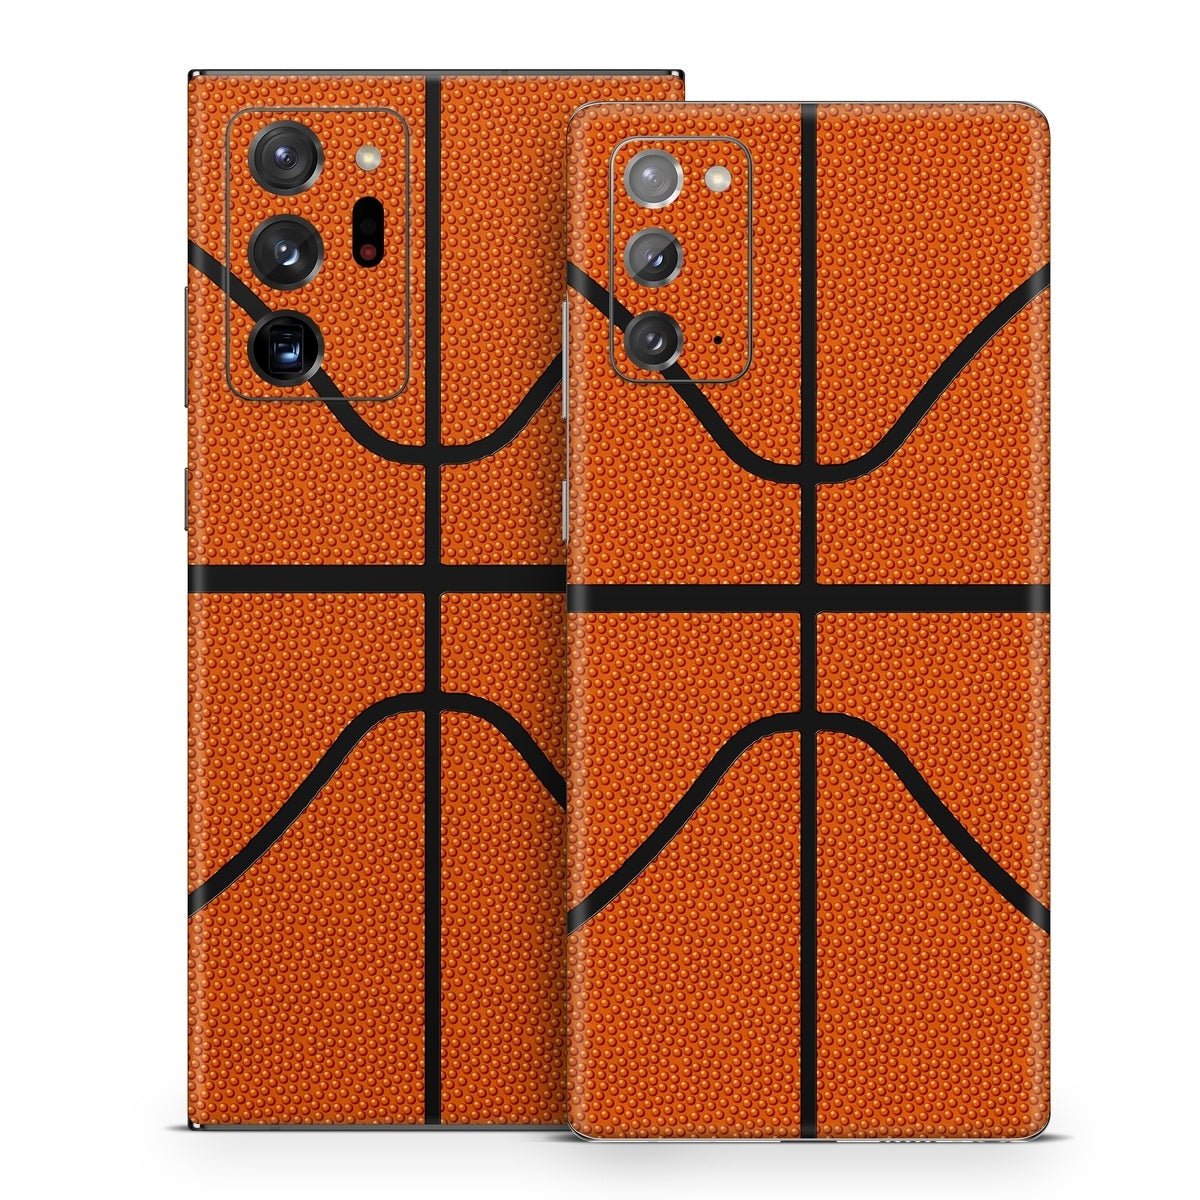 Basketball - Samsung Galaxy Note 20 Skin - Sports - DecalGirl